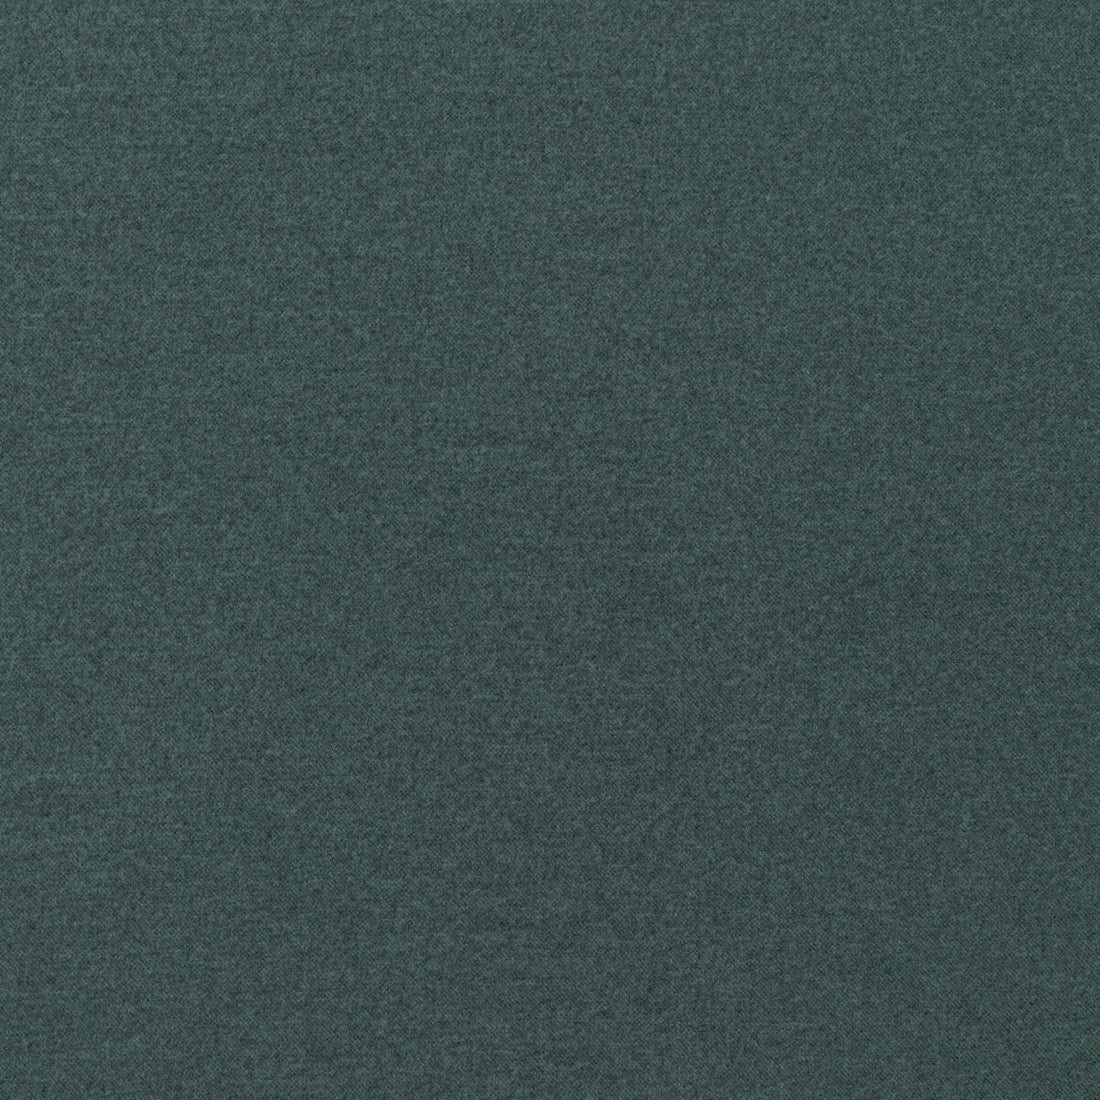 Kravet Smart fabric in 36110-505 color - pattern 36110.505.0 - by Kravet Smart in the Performance Kravetarmor collection